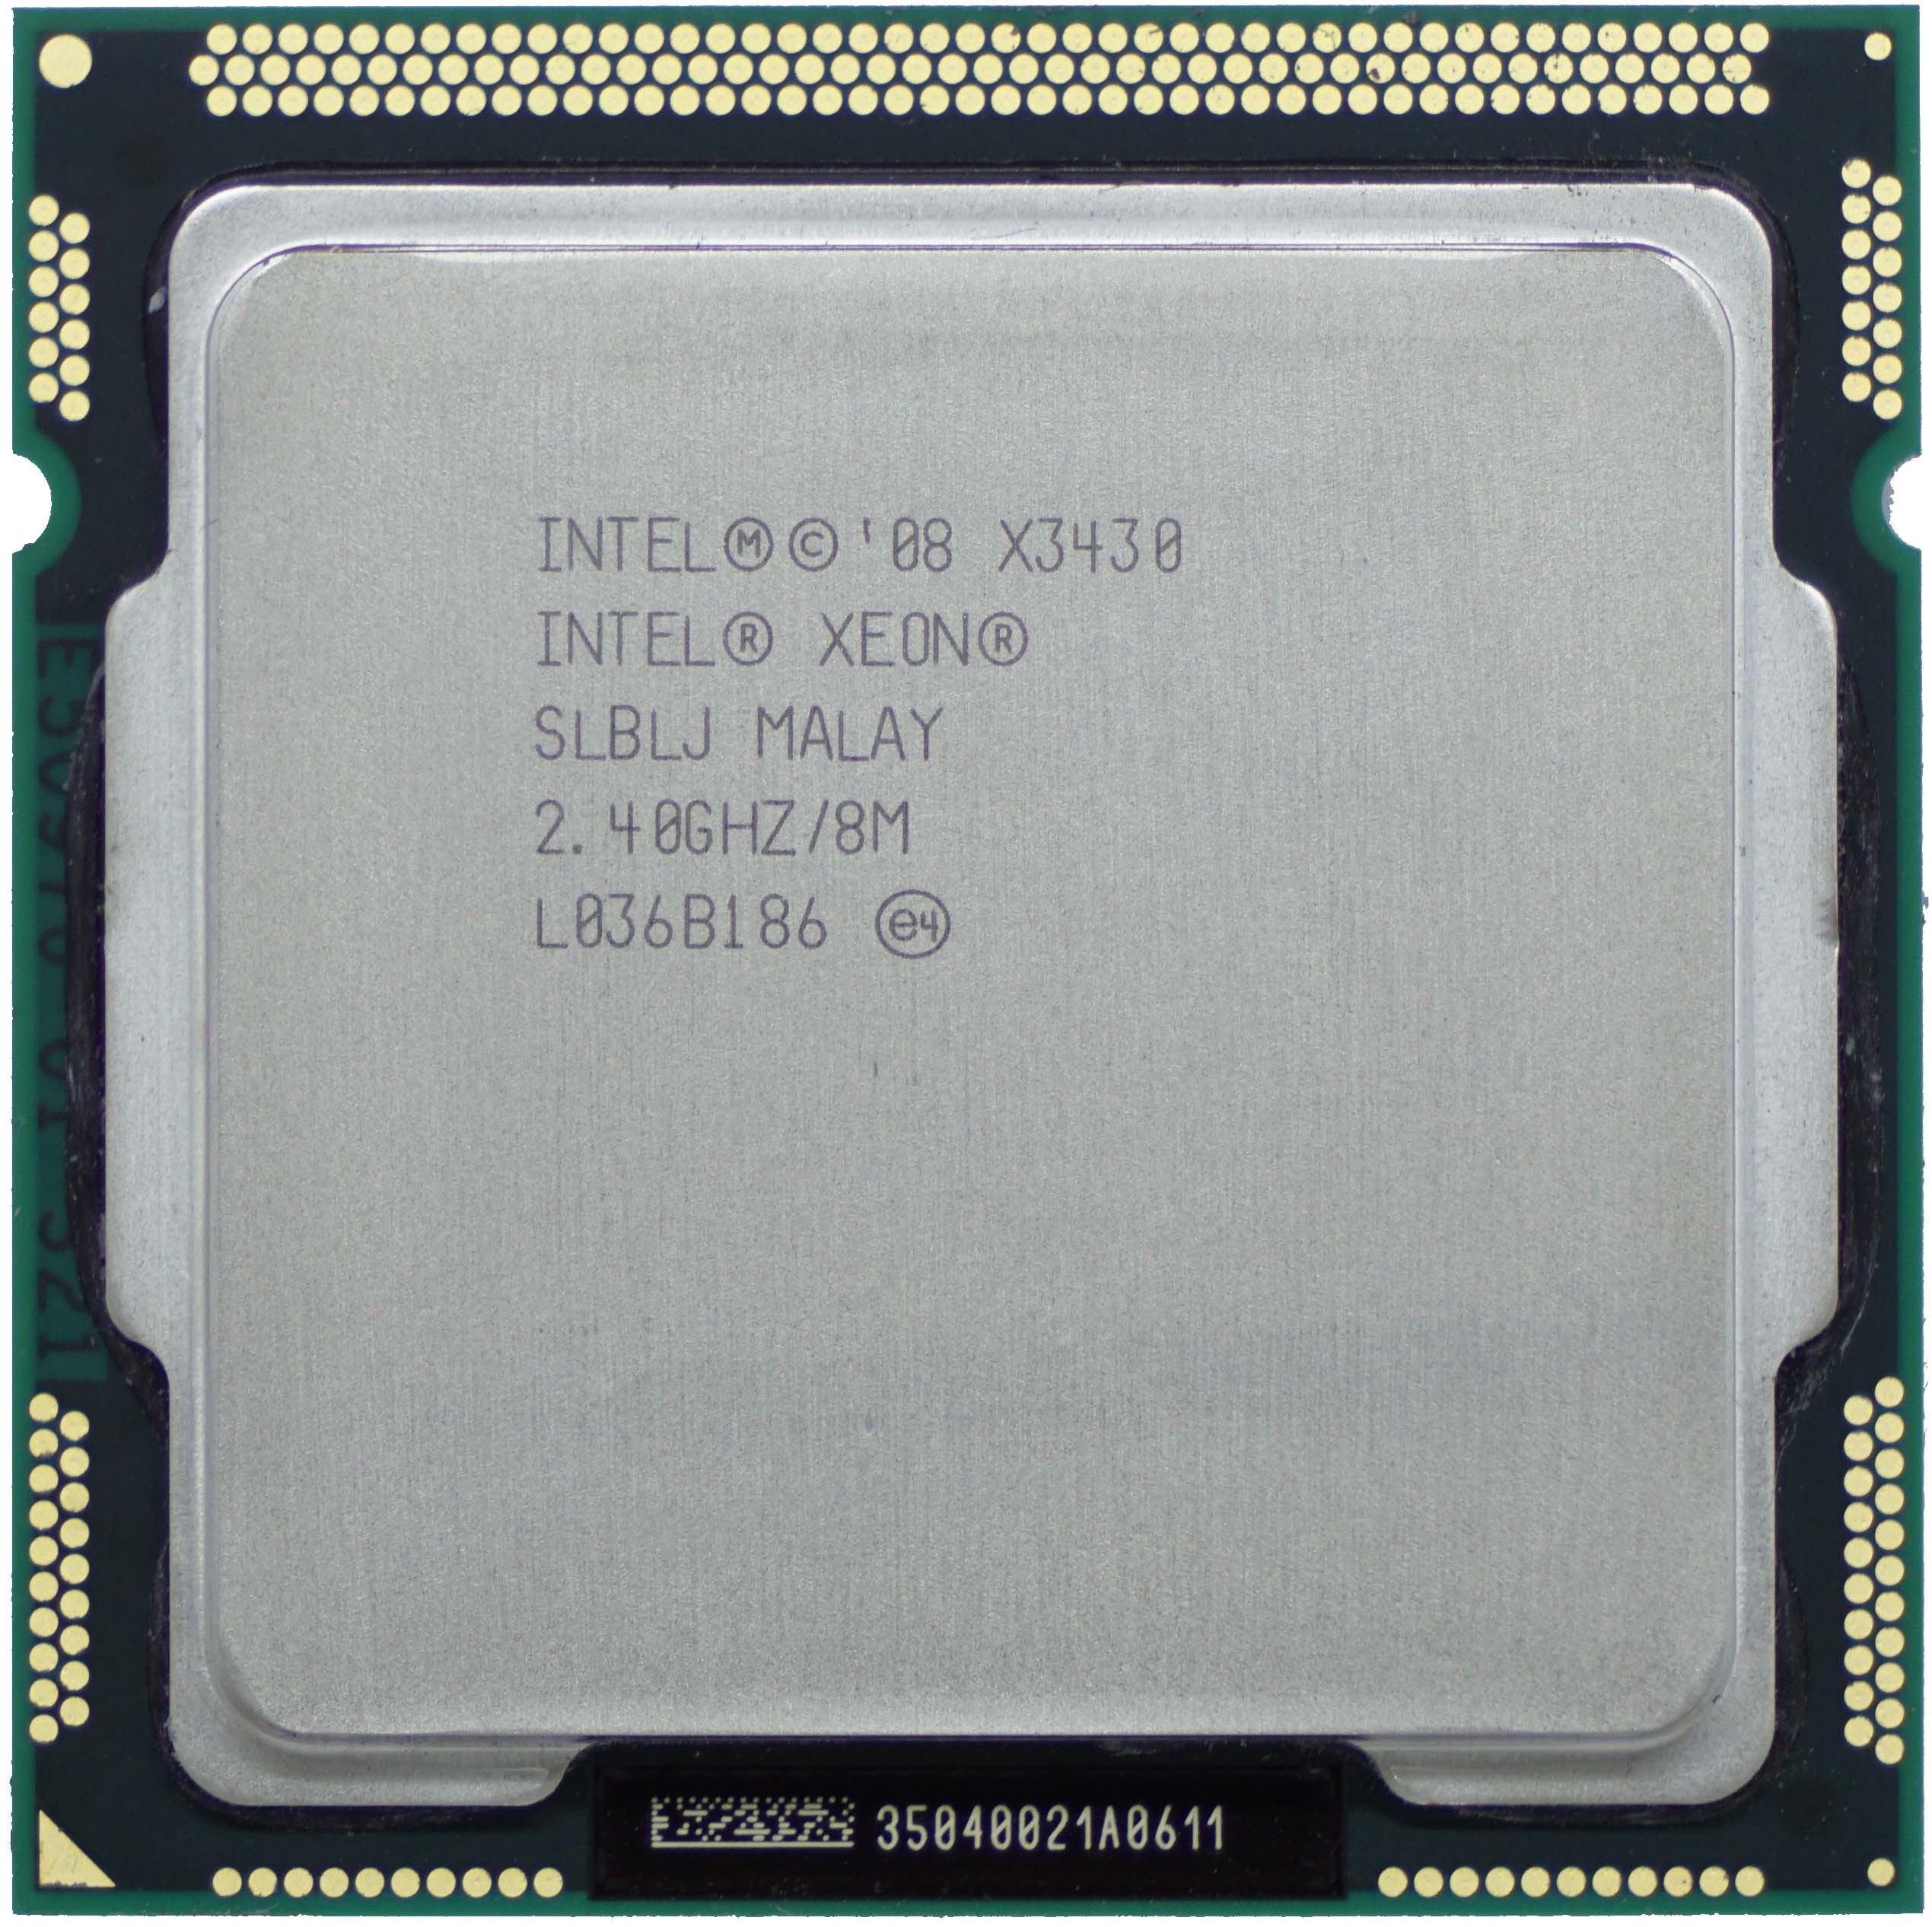 Intel Intel Xeon Processor X3430 Quad Core 8M Cache 2.40GHz 95W TDP CPU 